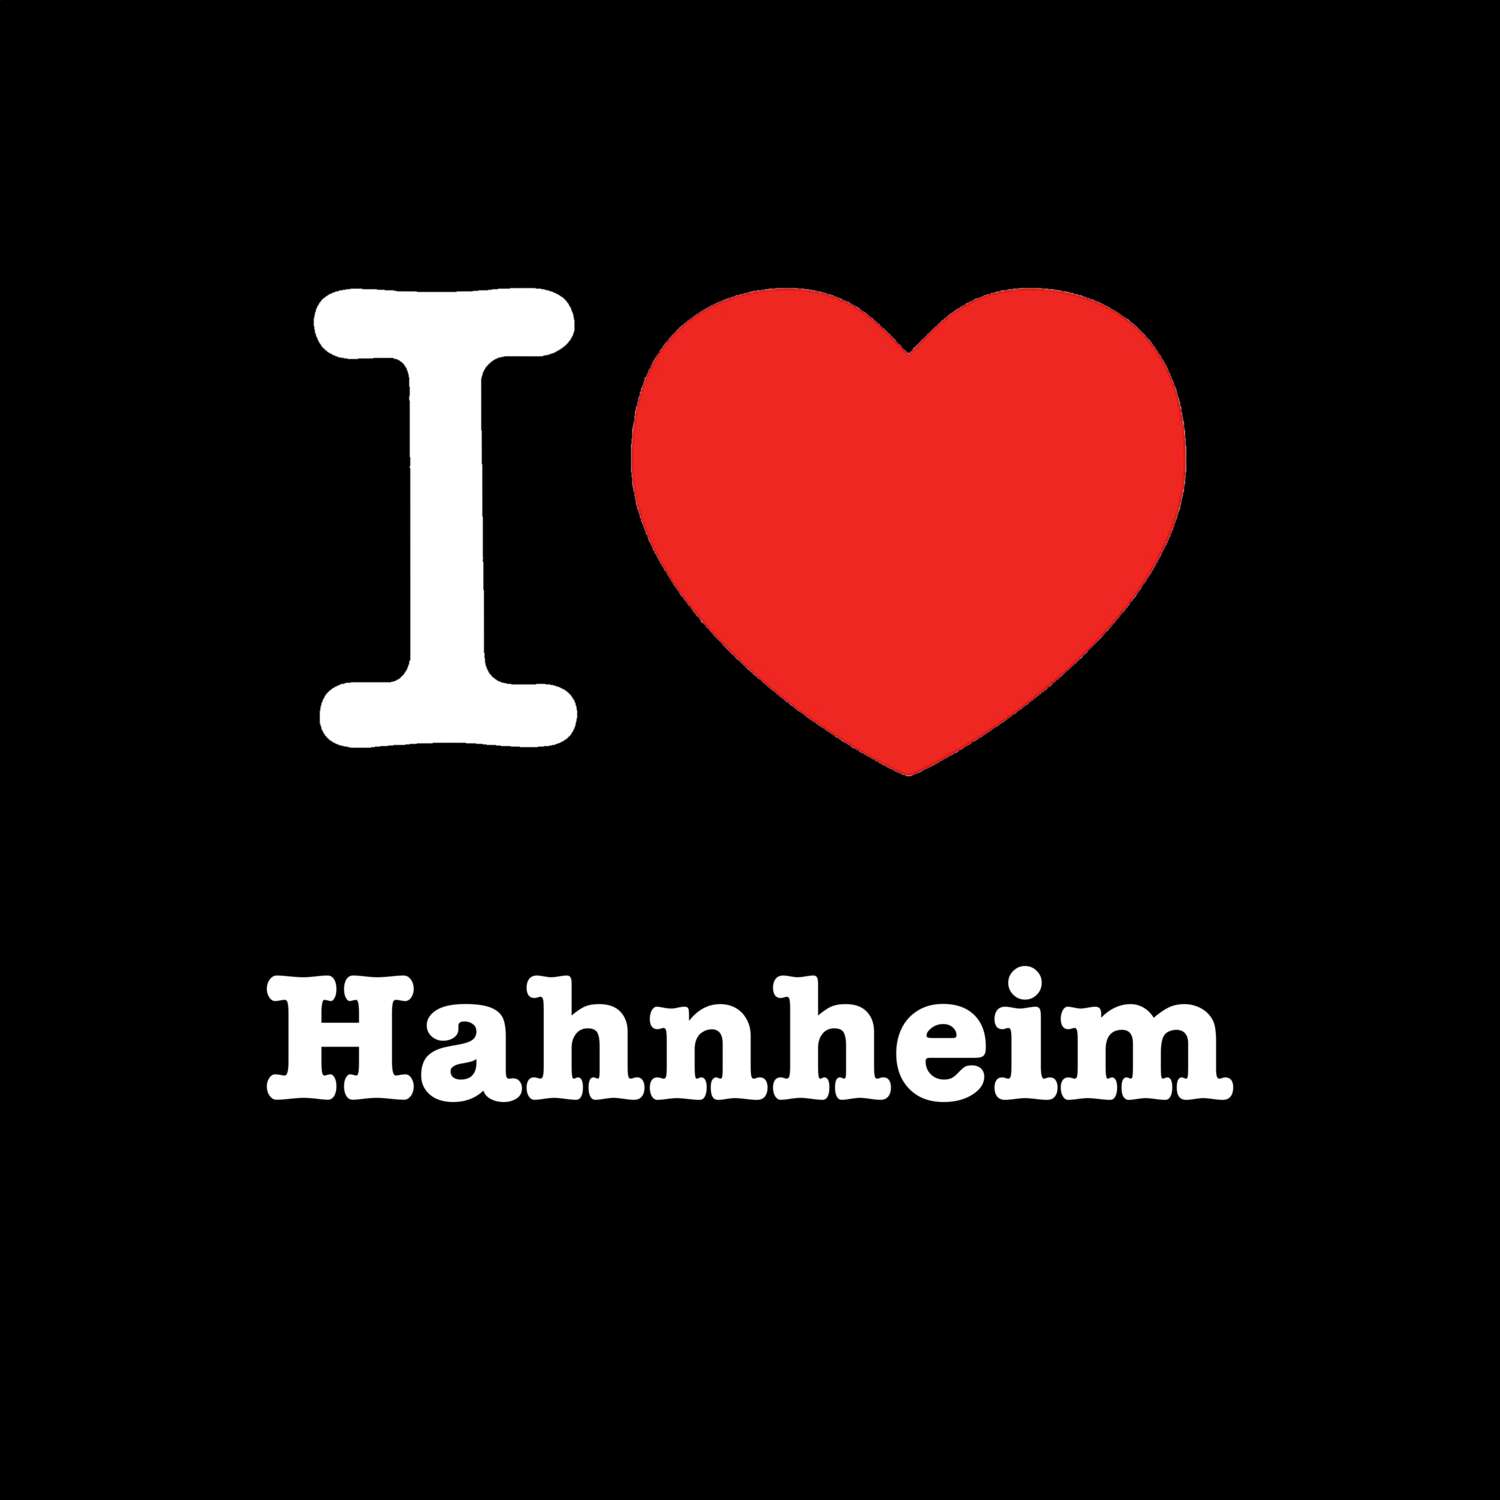 Hahnheim T-Shirt »I love«